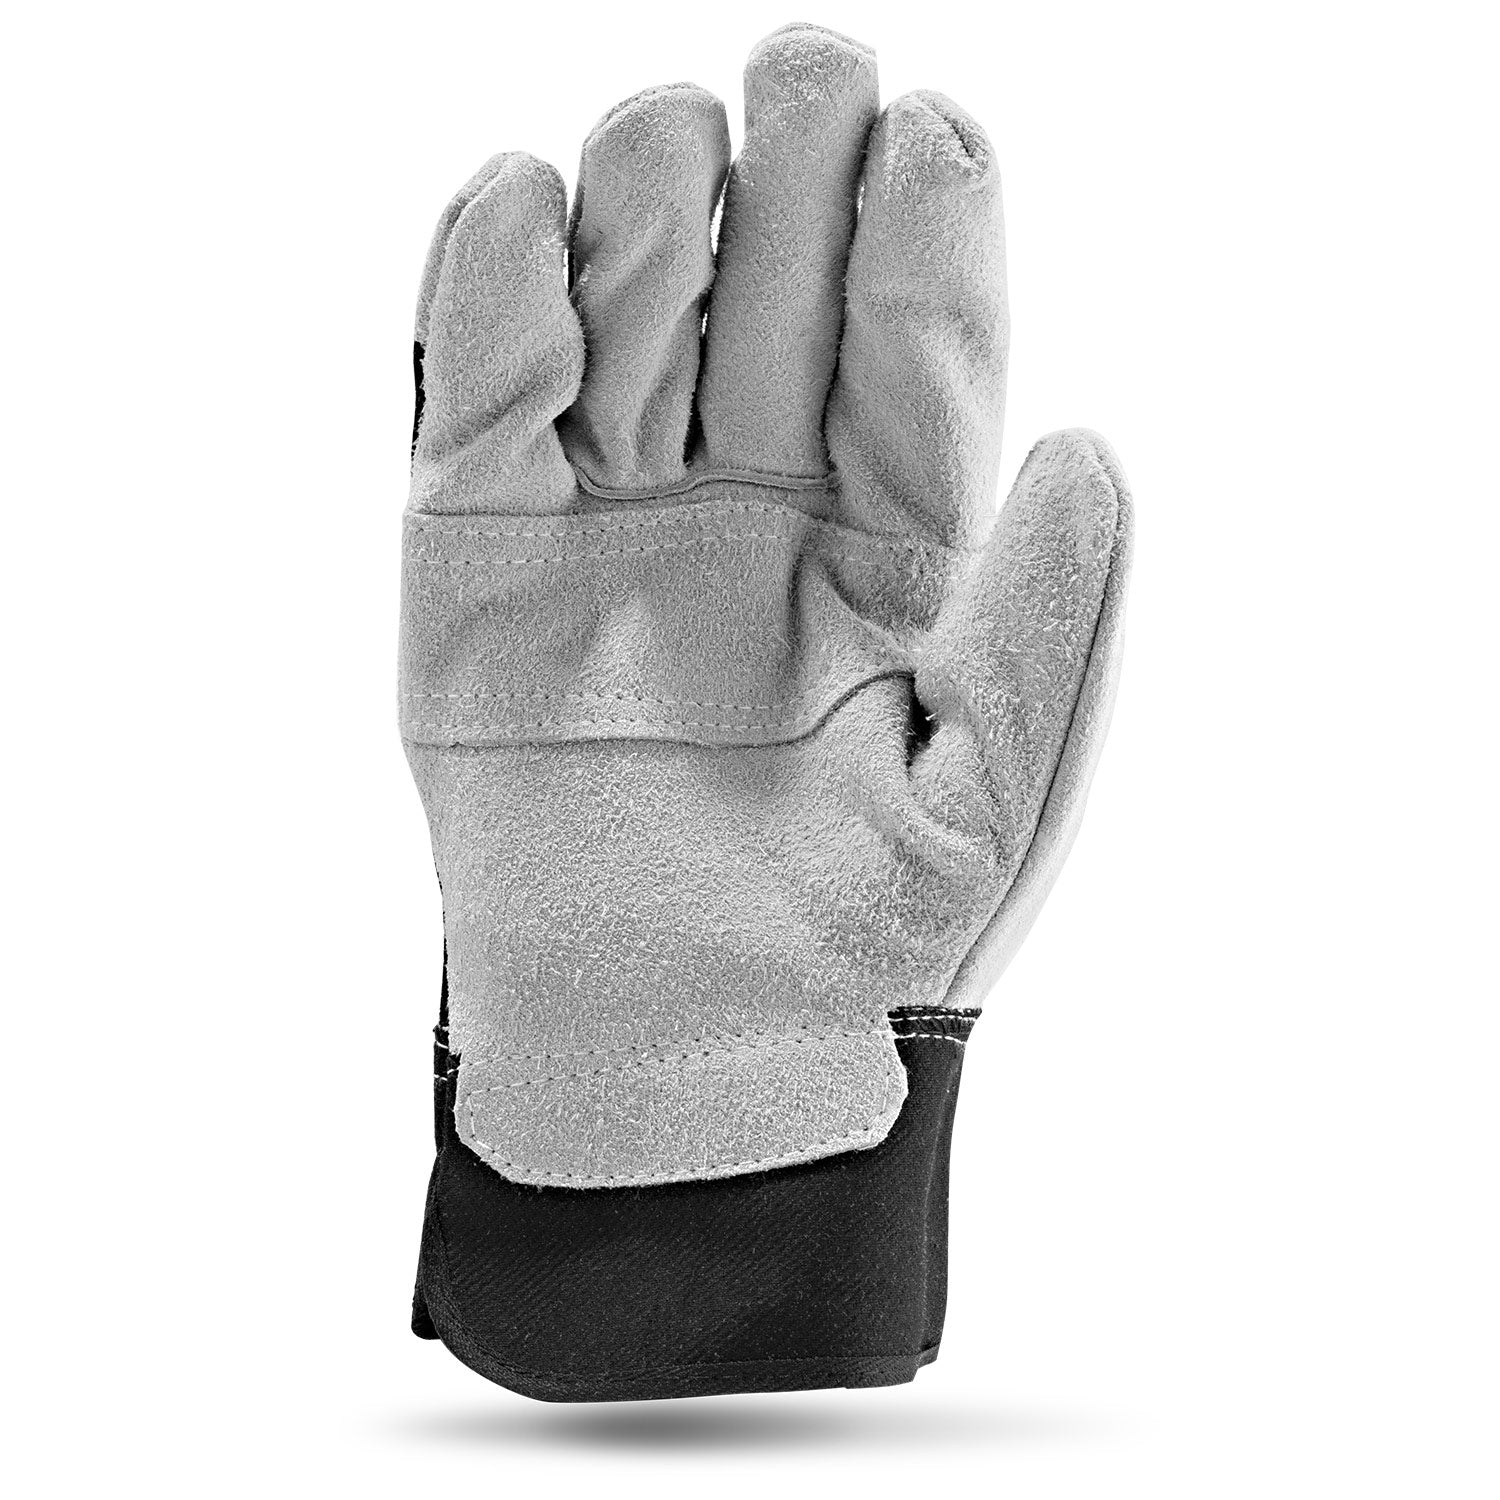 LIFT Safety - Split Leather Glove